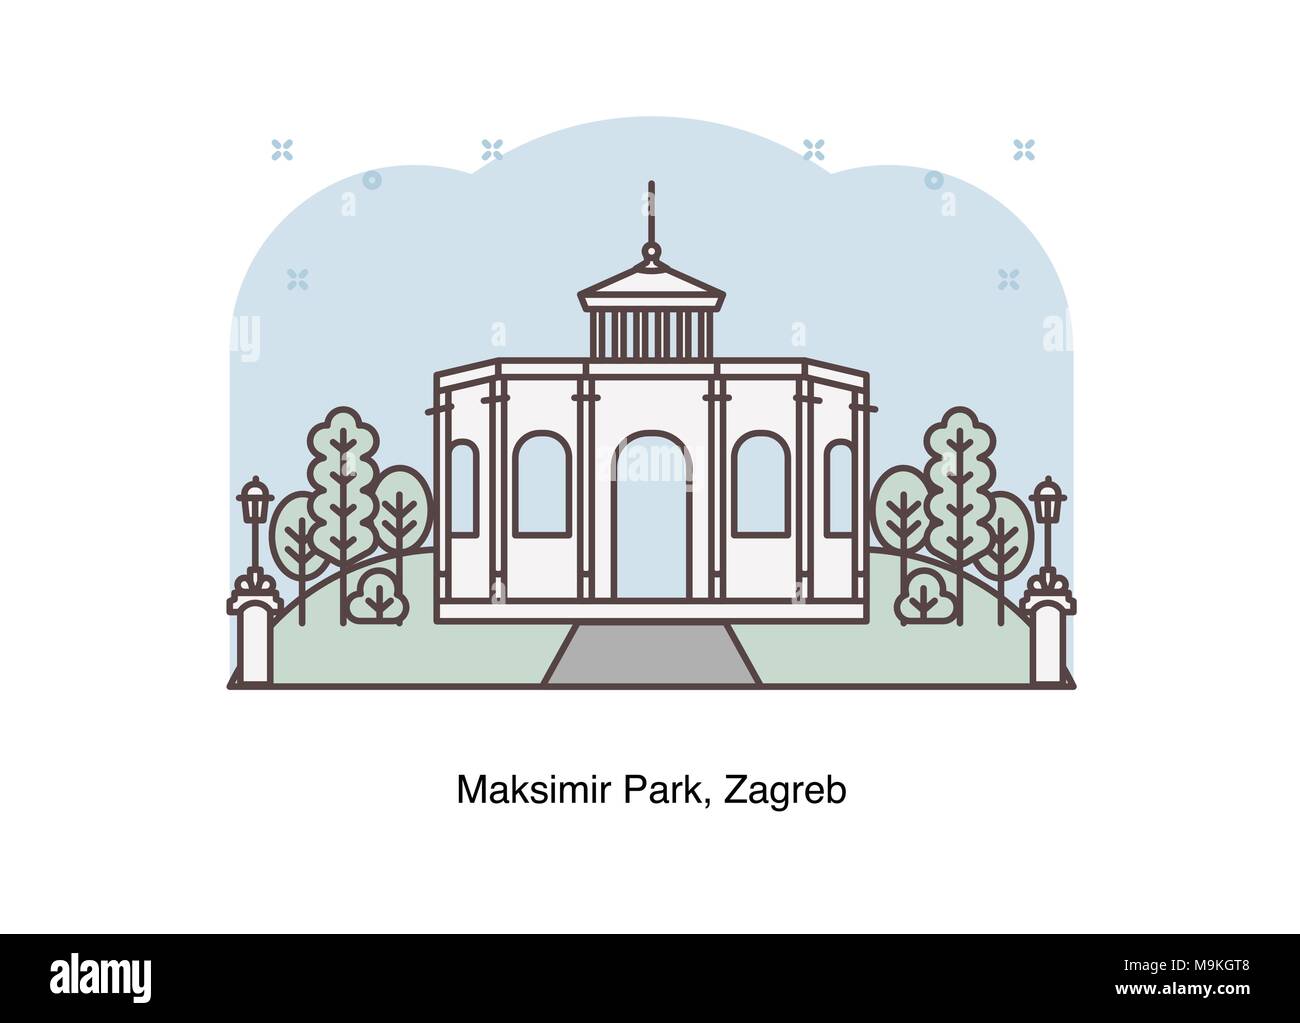 Vektor linie Abbildung der Maksimir Park, Zagreb, Kroatien. Stock Vektor